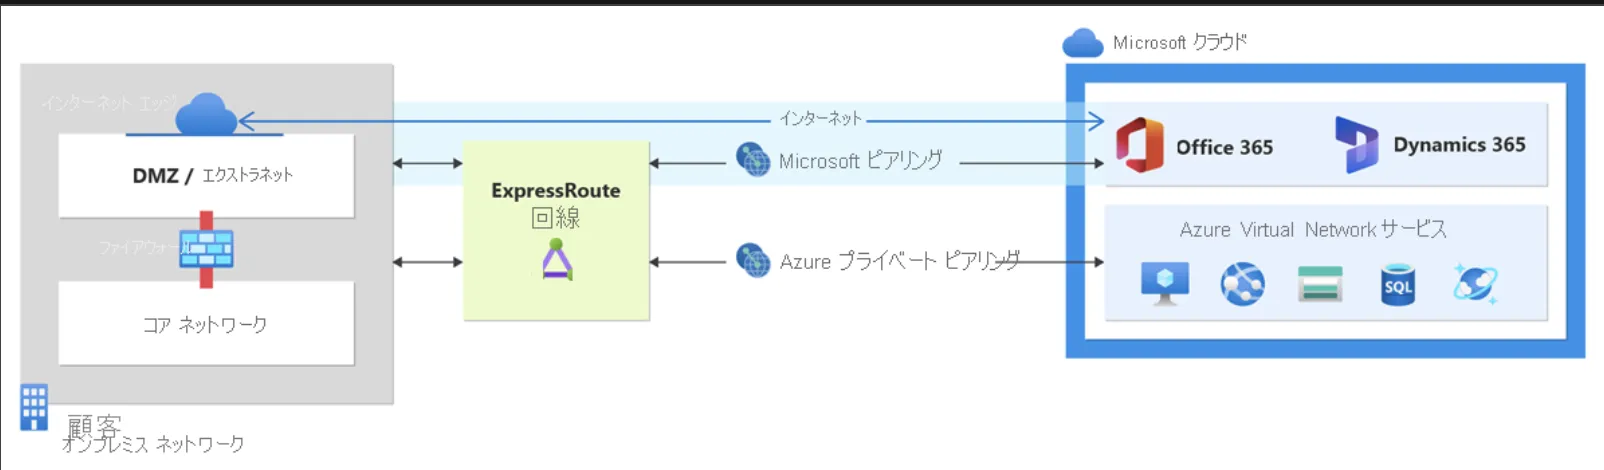 Azure portal を使用した ExpressRoute 回線のピアリングの作成と変更のアーキテクチャ